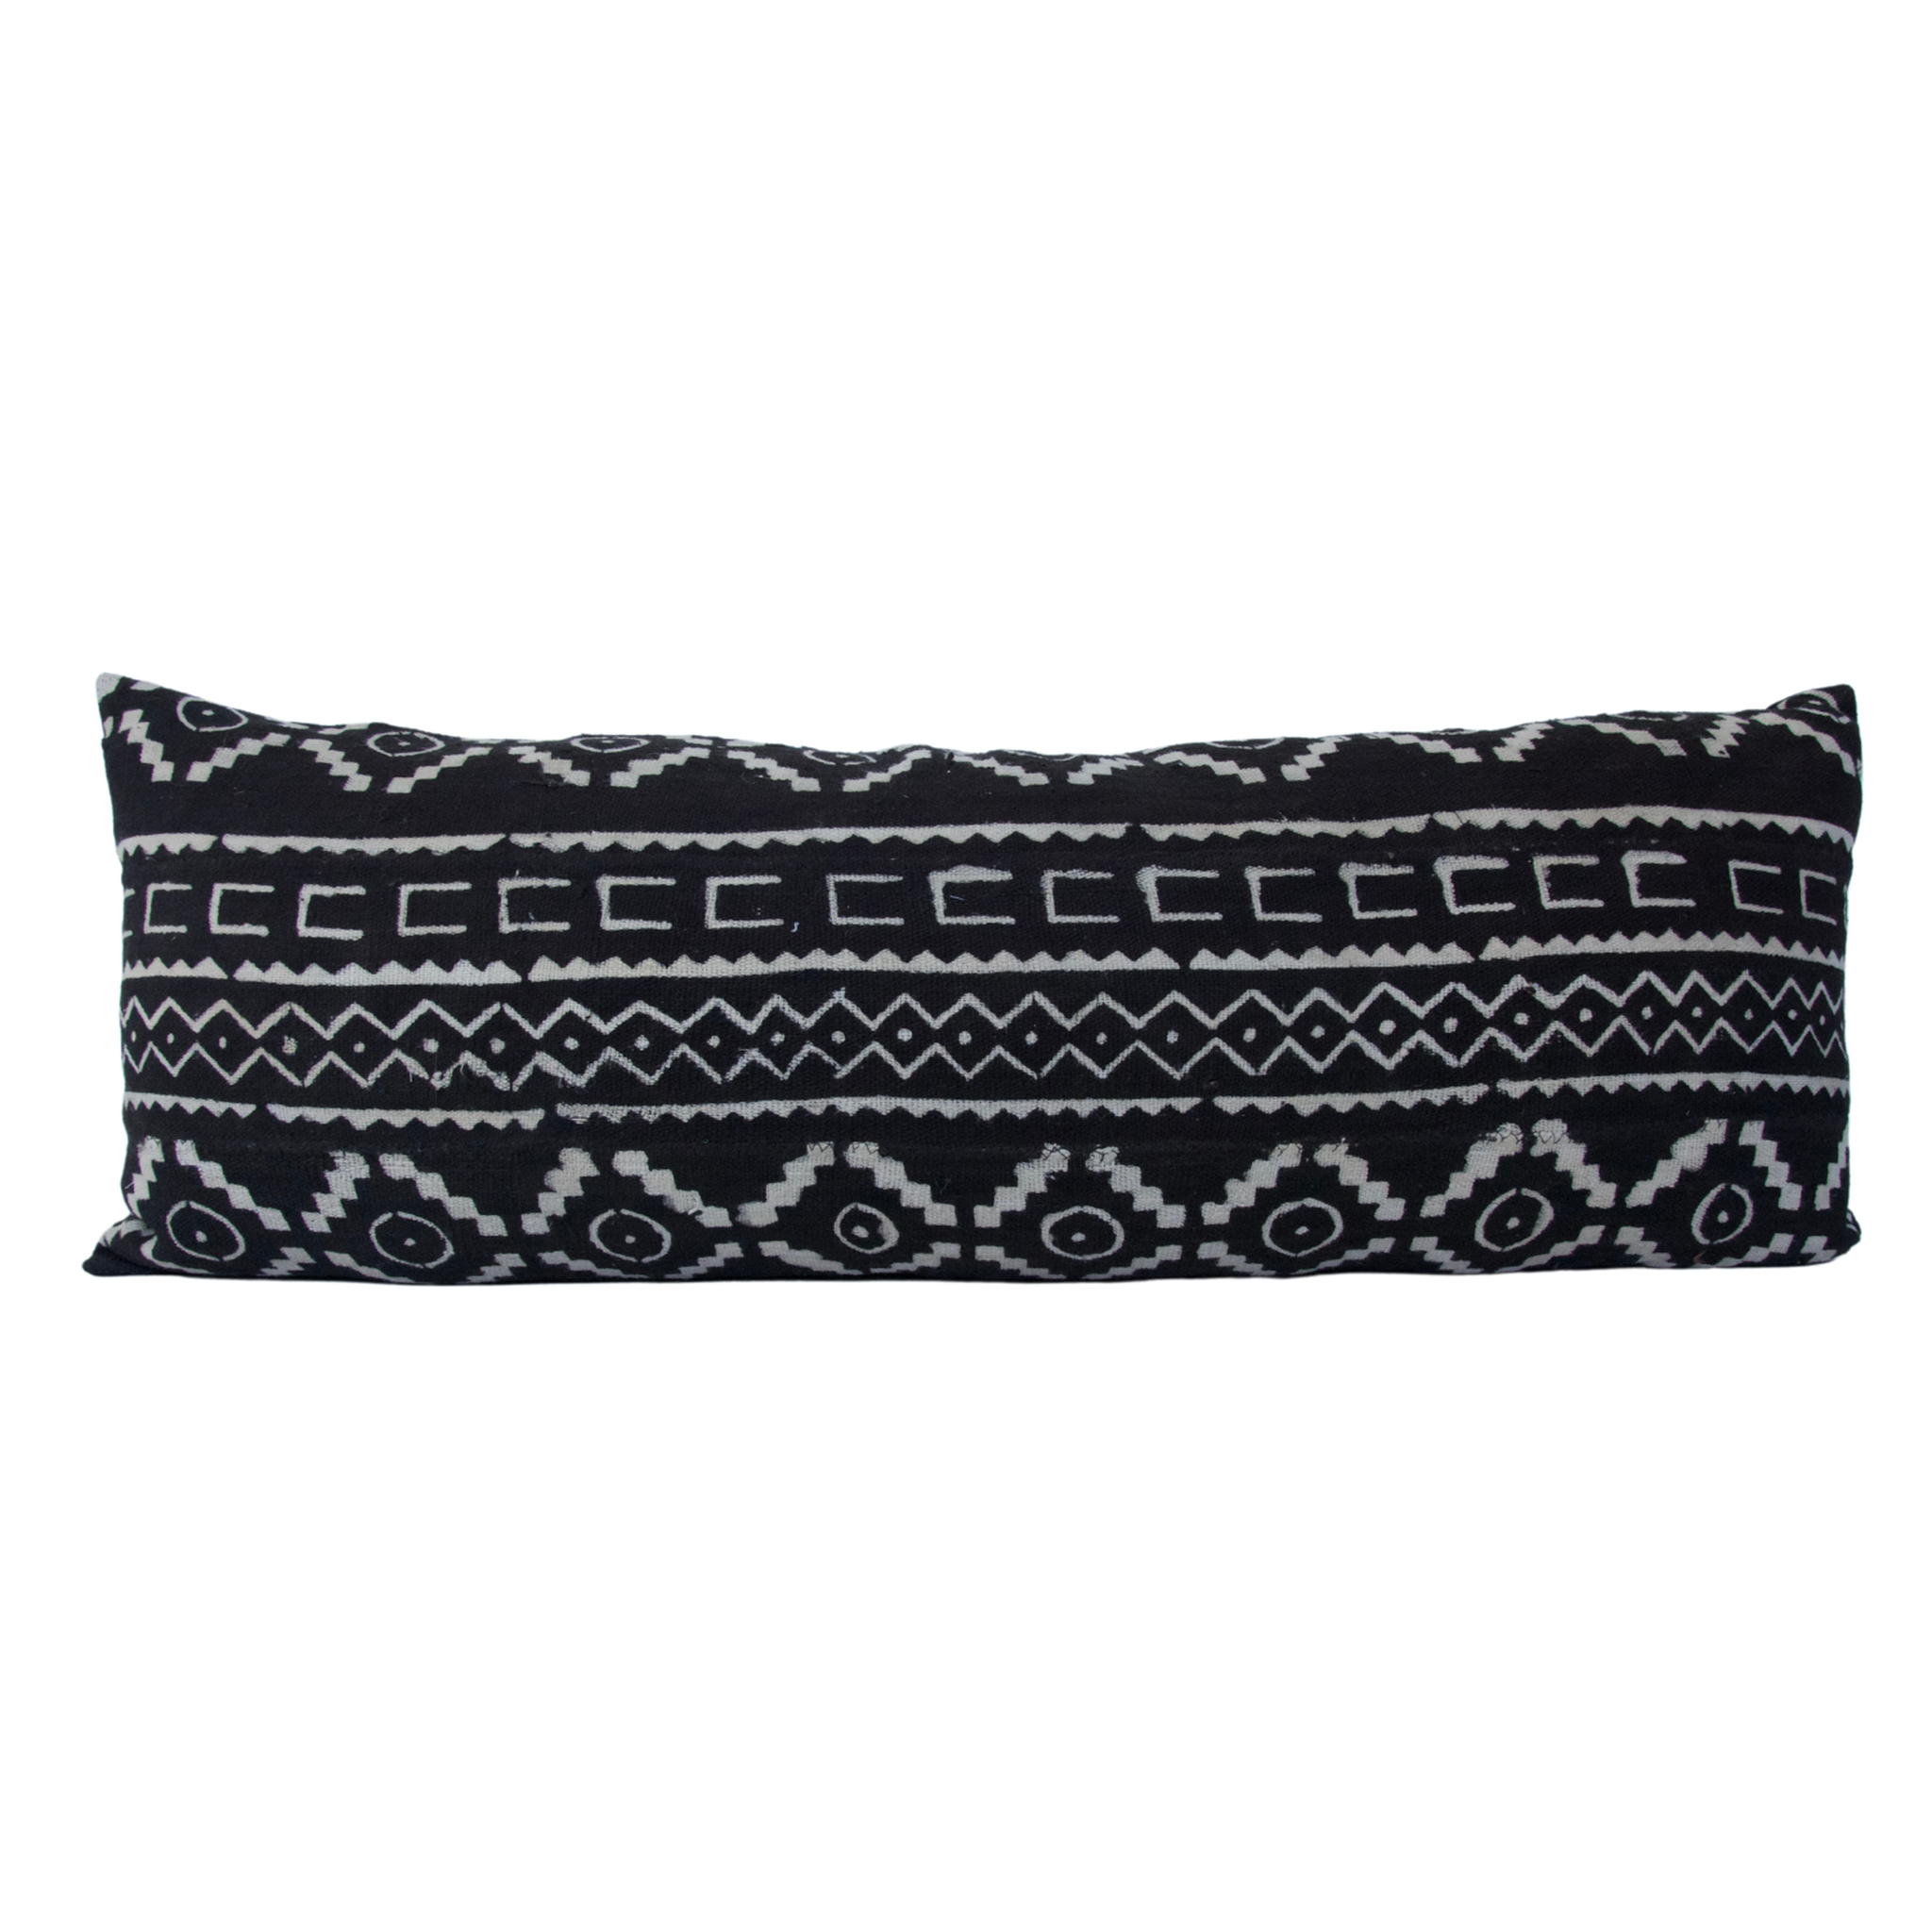 SALE! 14x36, 20X20 & 14x20 White Mud Cloth Long Lumbar Pillow | Stripes Are  Vertical